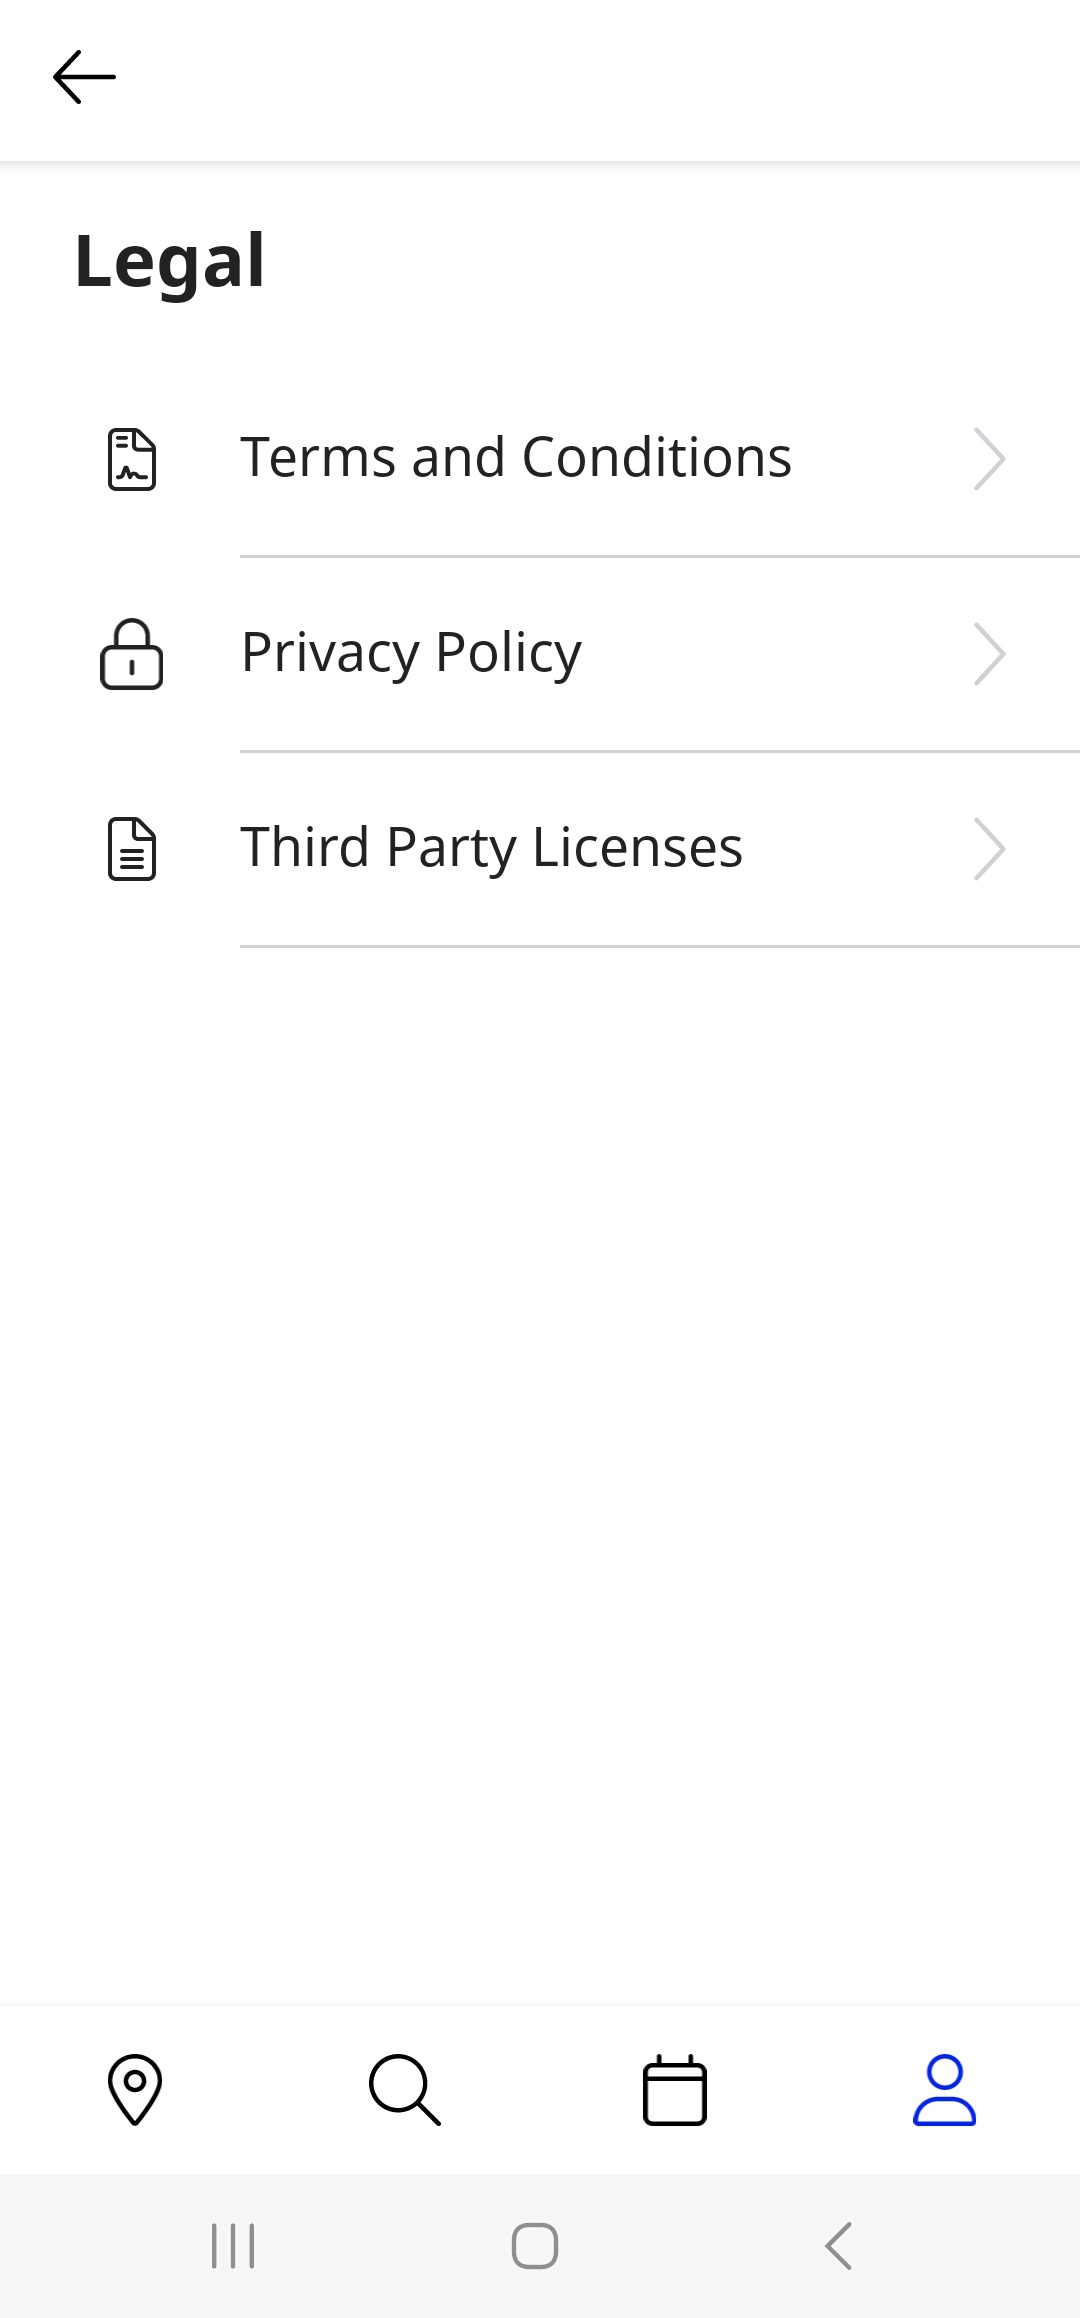 TEEM Mobile Profile Legal Section.jpg